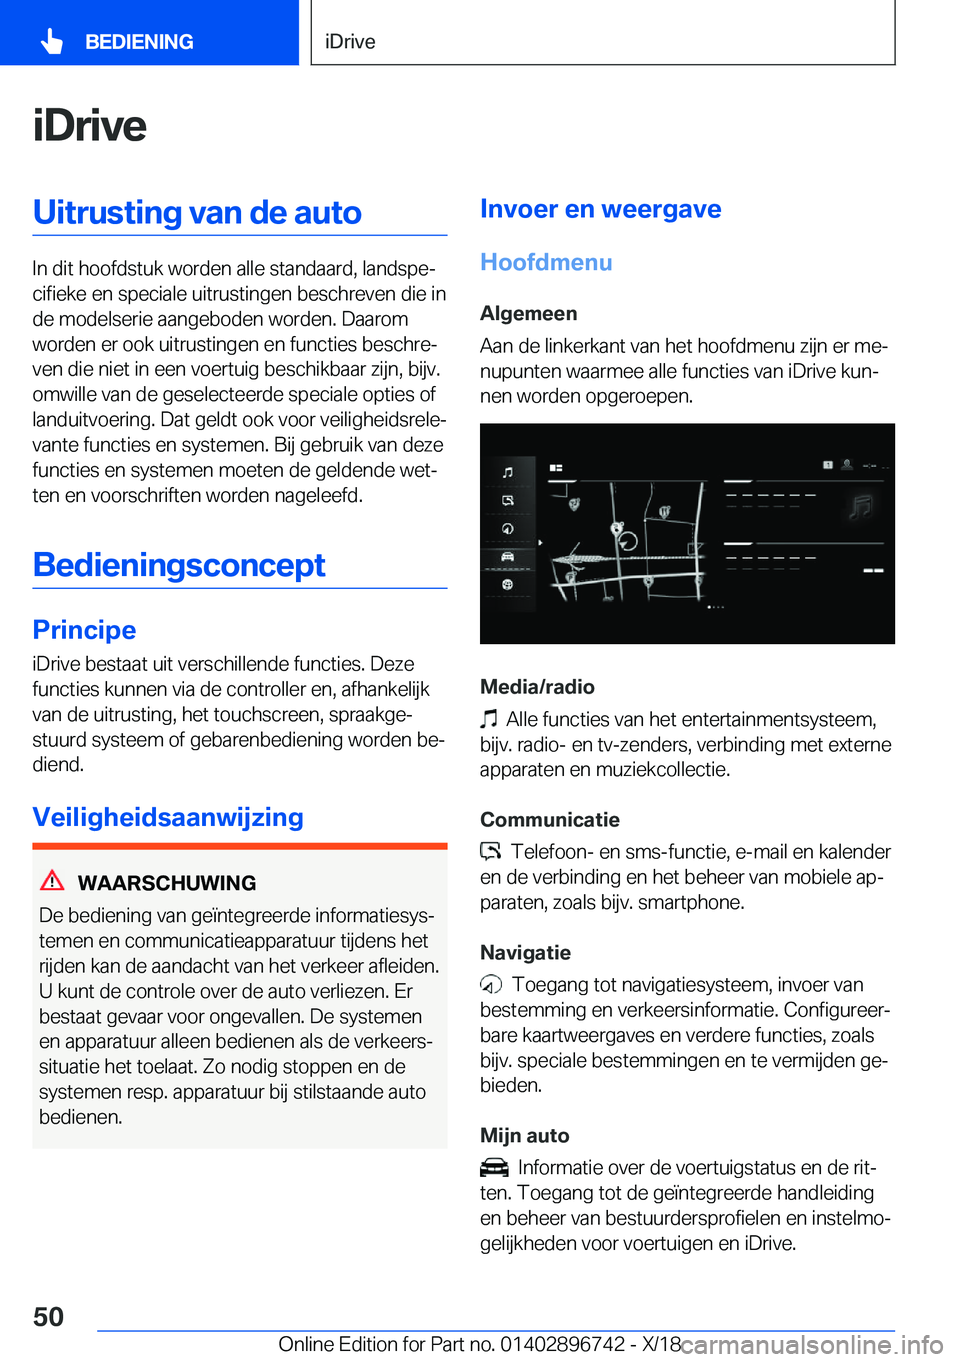 BMW X5 2019  Instructieboekjes (in Dutch) �i�D�r�i�v�e�U�i�t�r�u�s�t�i�n�g��v�a�n��d�e��a�u�t�o
�I�n��d�i�t��h�o�o�f�d�s�t�u�k��w�o�r�d�e�n��a�l�l�e��s�t�a�n�d�a�a�r�d�,��l�a�n�d�s�p�ej�c�i�f�i�e�k�e��e�n��s�p�e�c�i�a�l�e��u�i�t�